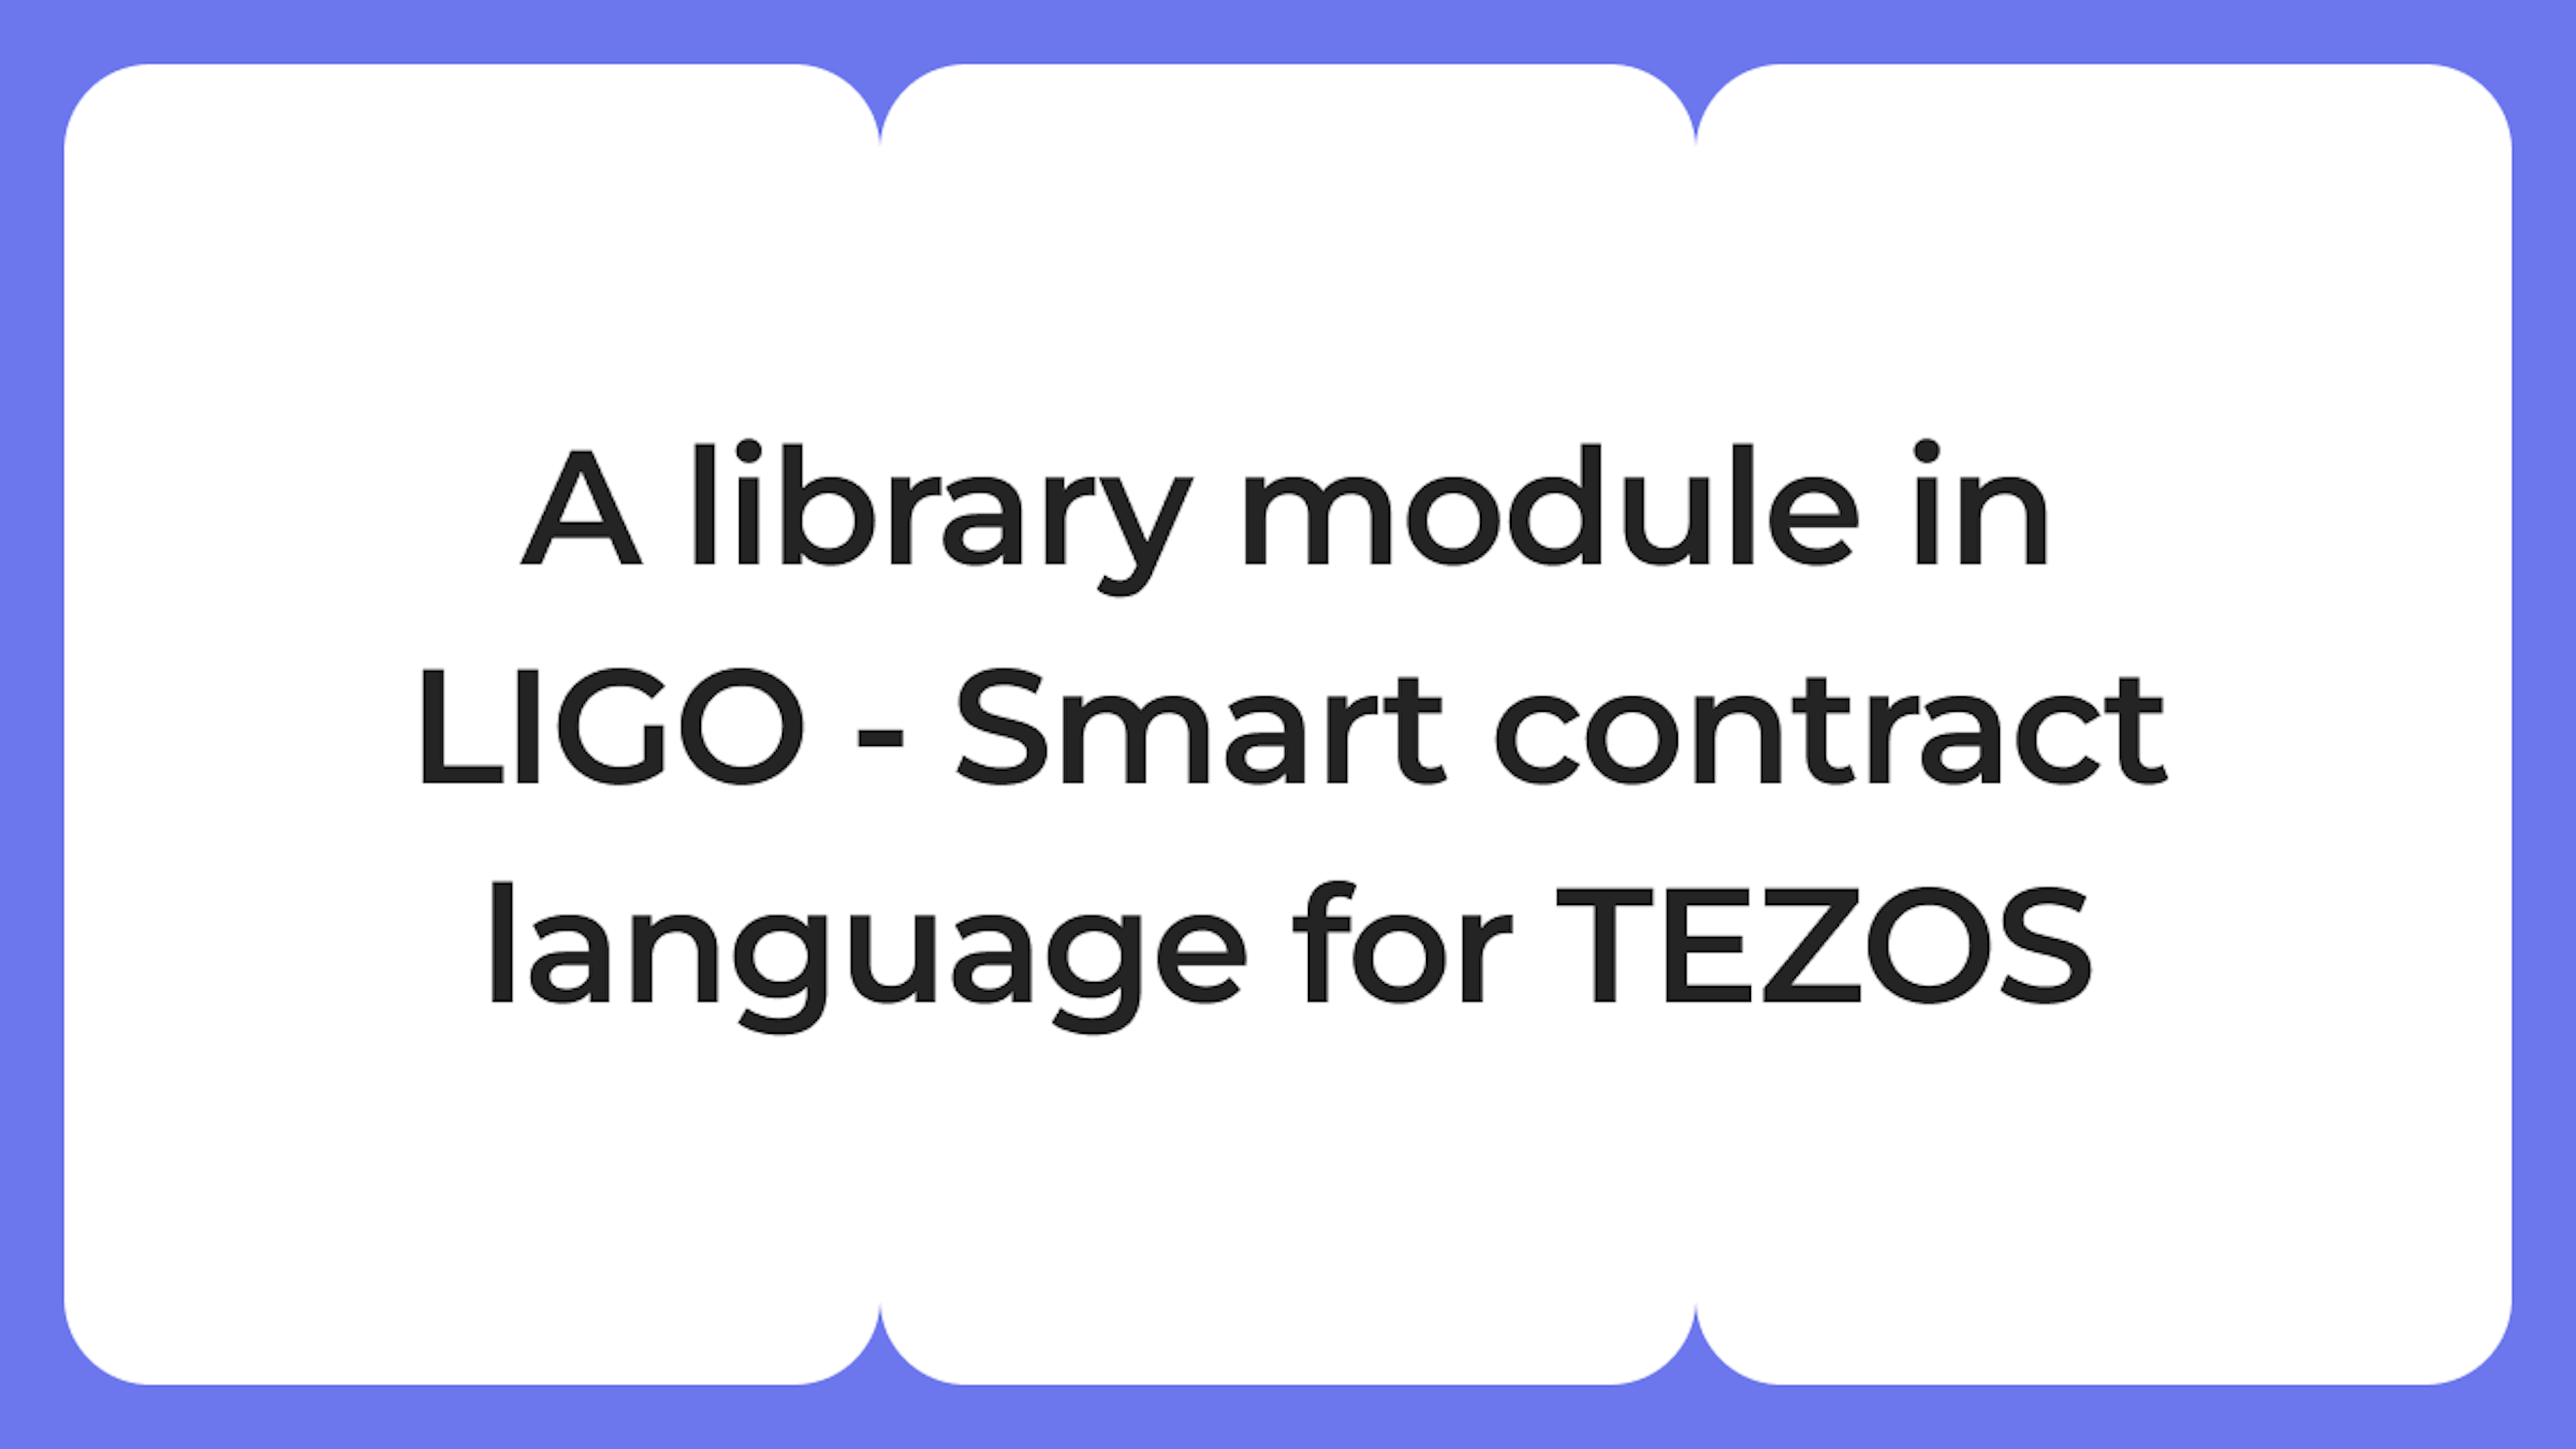 A library module in LIGO - Smart contract language for TEZOS